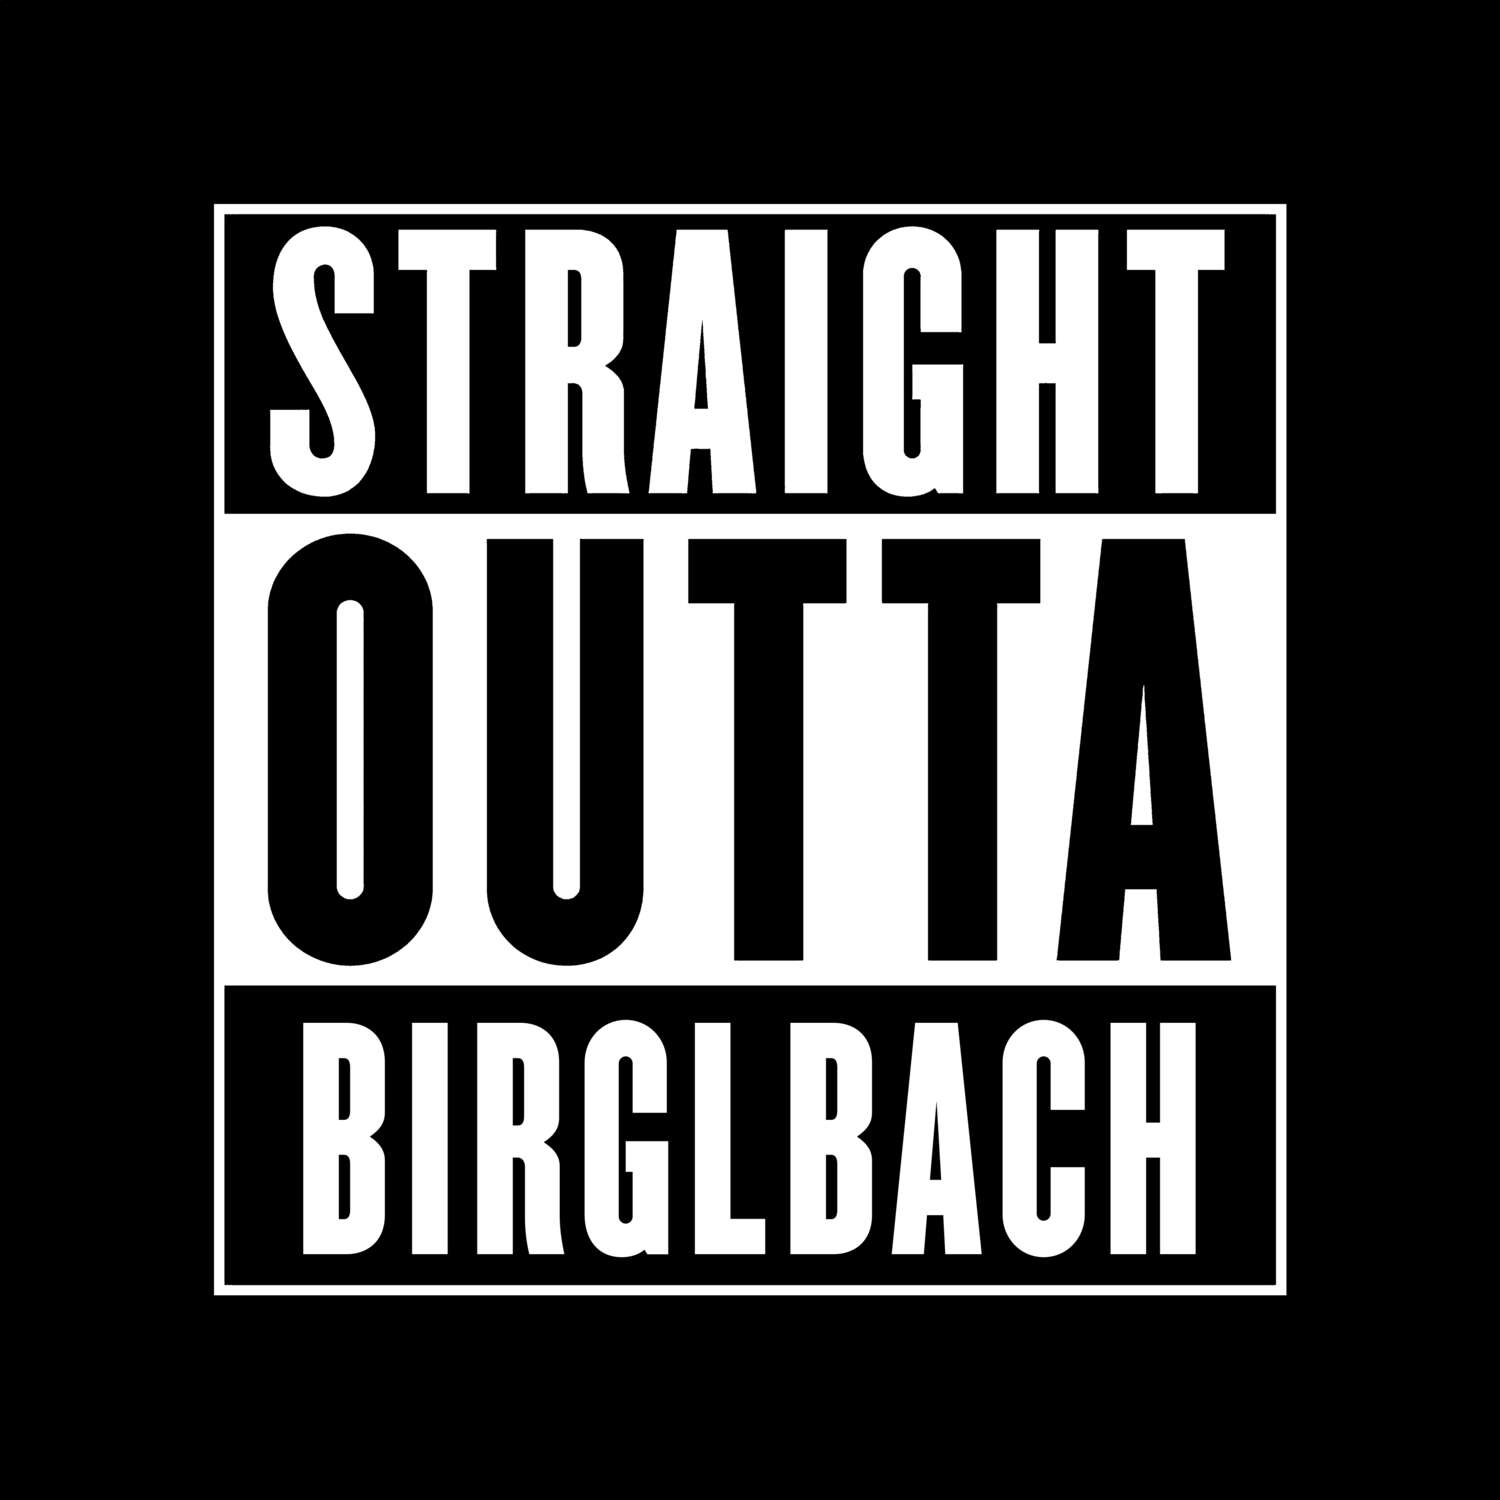 Birglbach T-Shirt »Straight Outta«